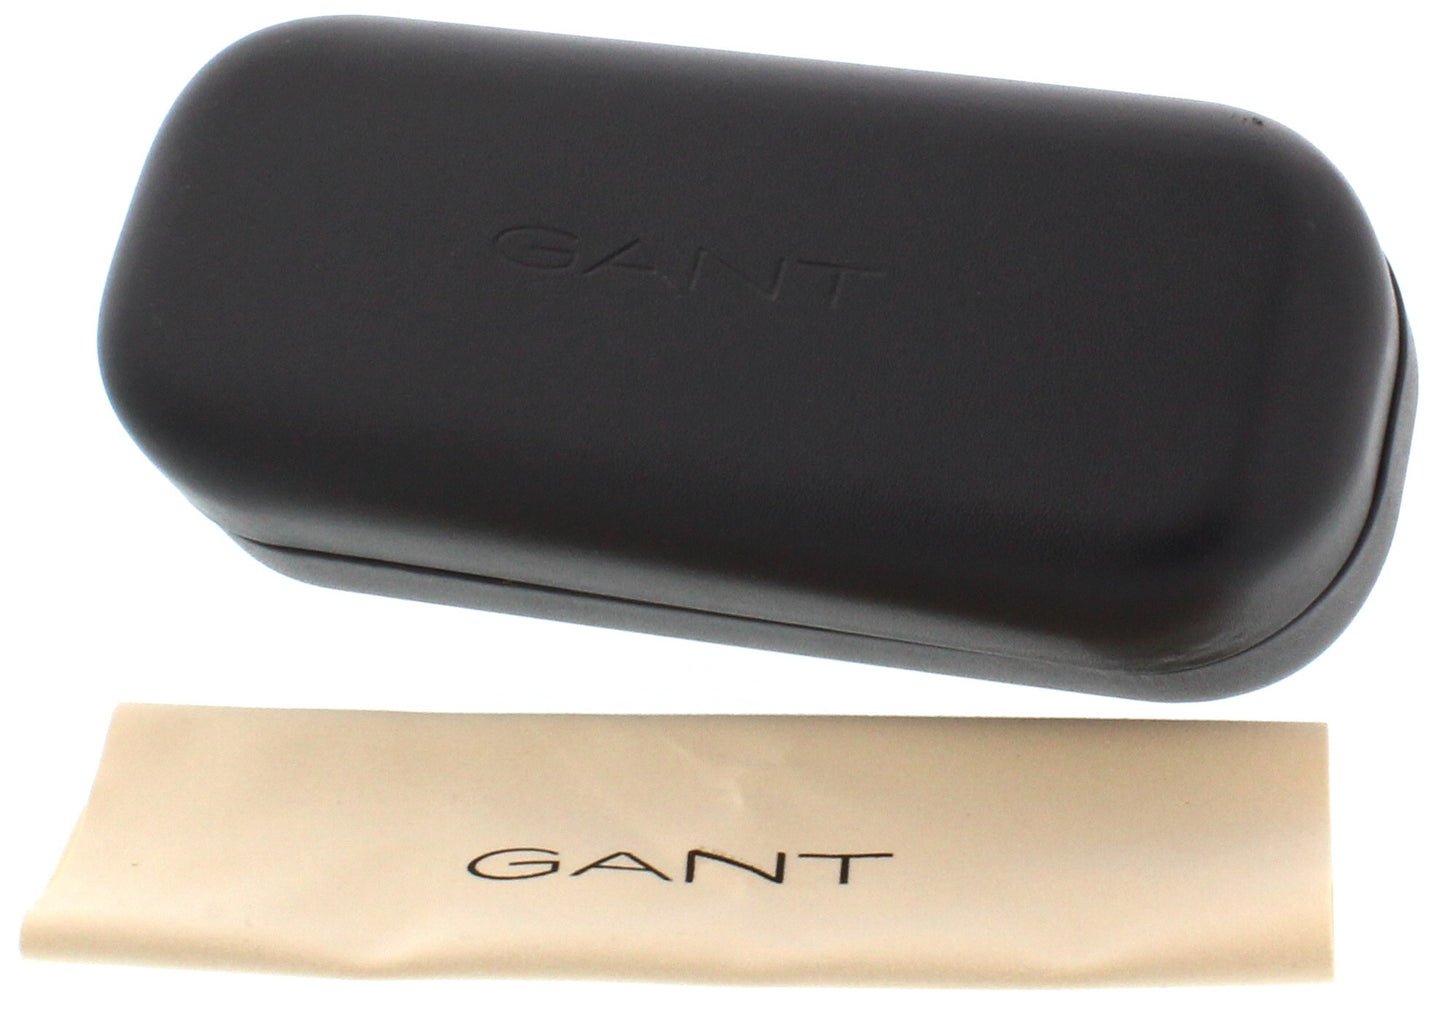 GANT GA4081-091 53mm New Eyeglasses